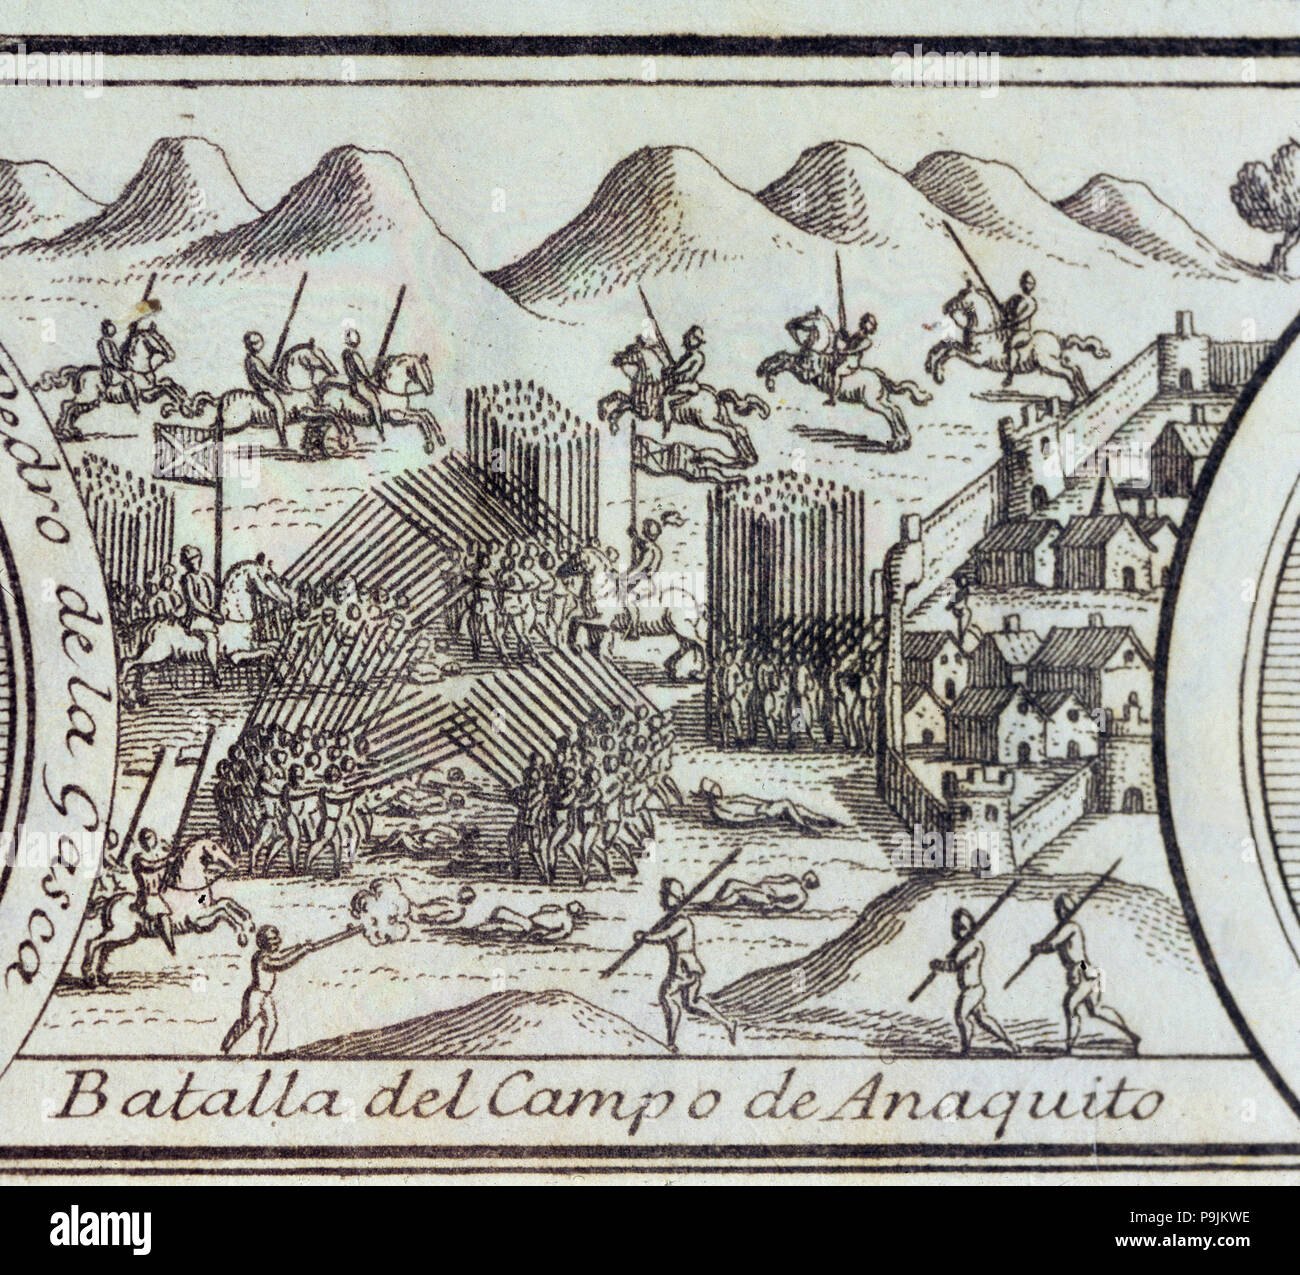 Conquest of Peru, 3rd Civil War, 'Battle of the Añaquito field' (now Ecuador), battle that faced … Stock Photo